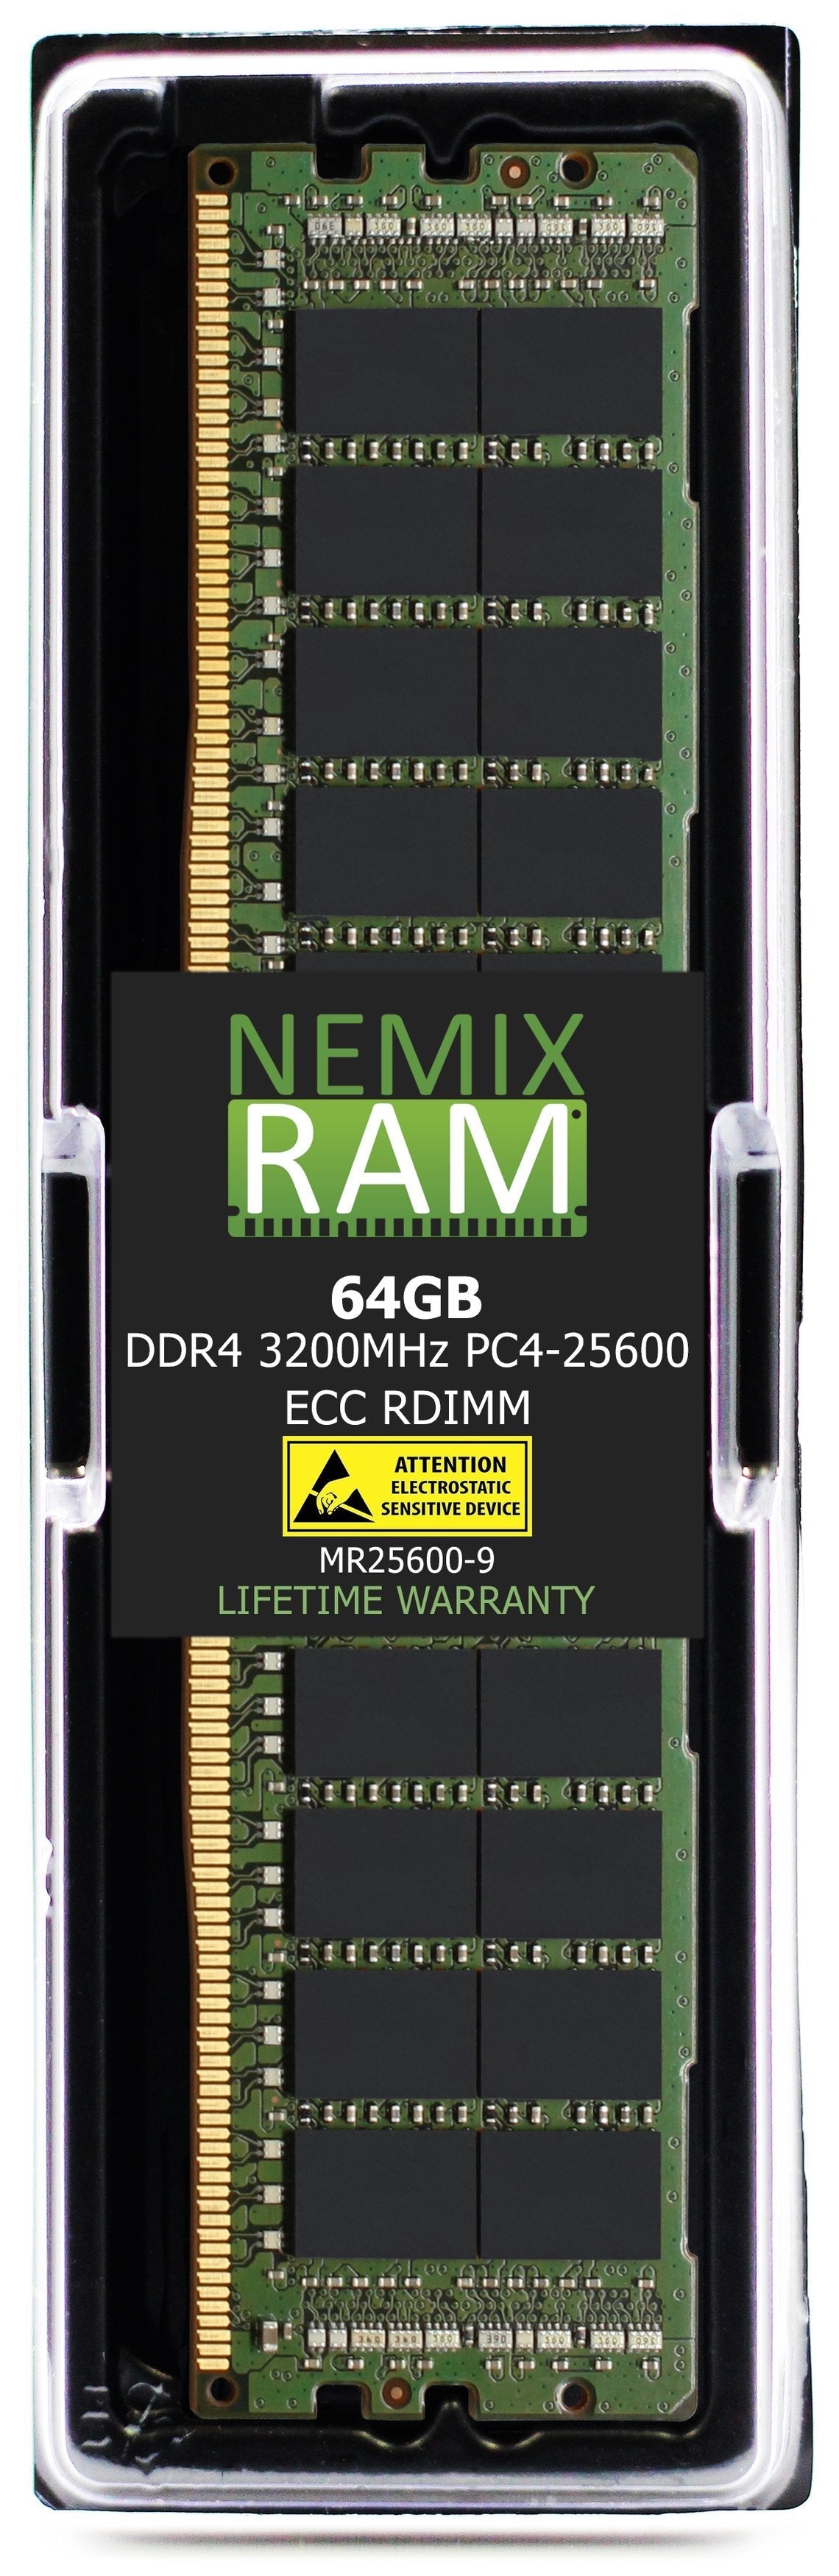 DDR4 3200MHZ PC4-25600 RDIMM 2RX4